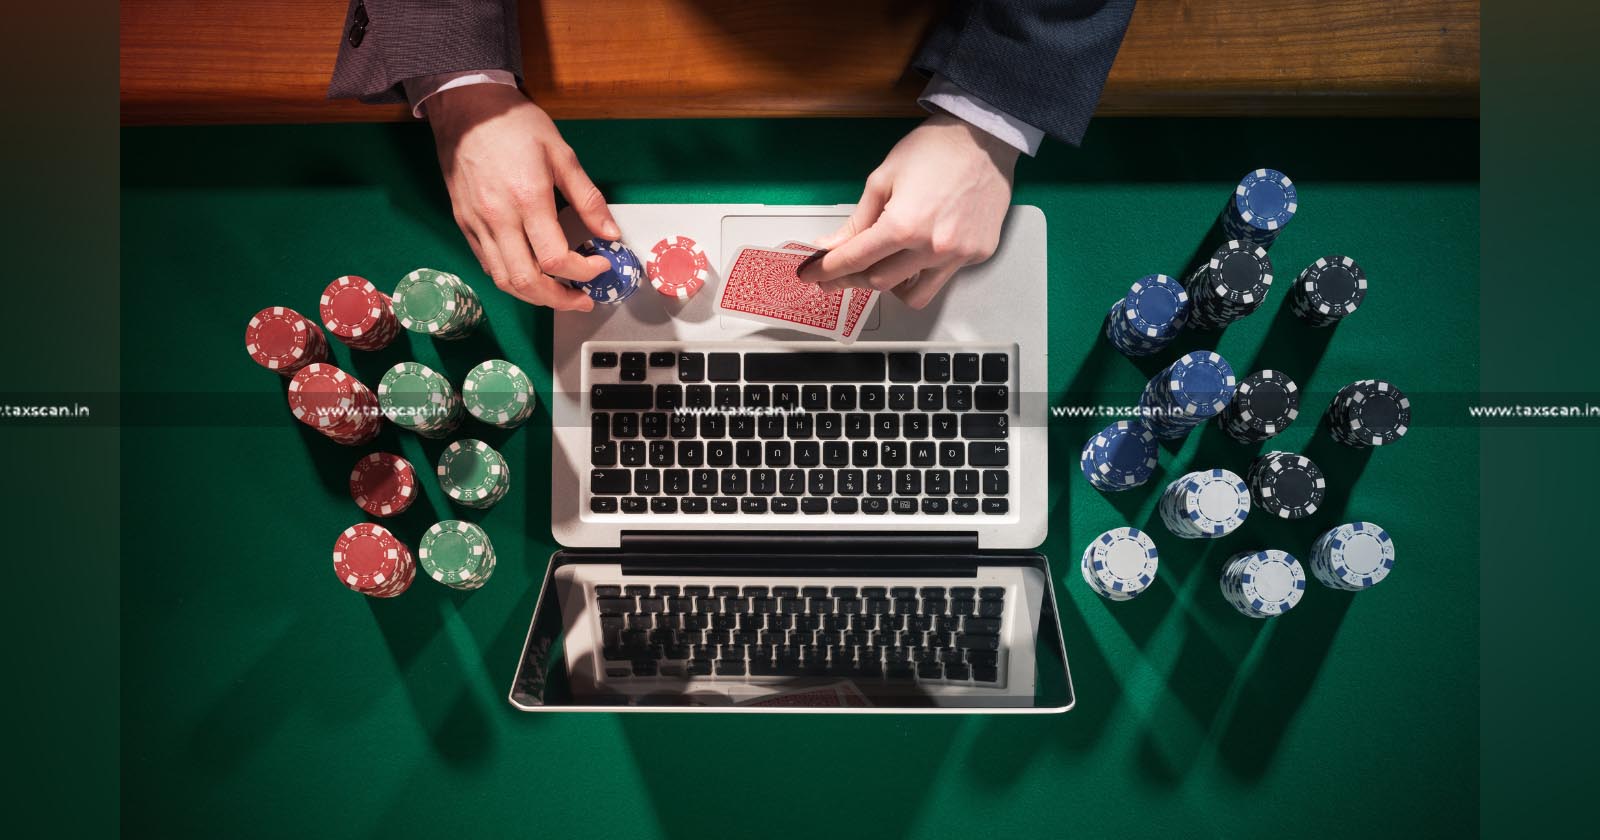 online casinos in 2021 – Predictions